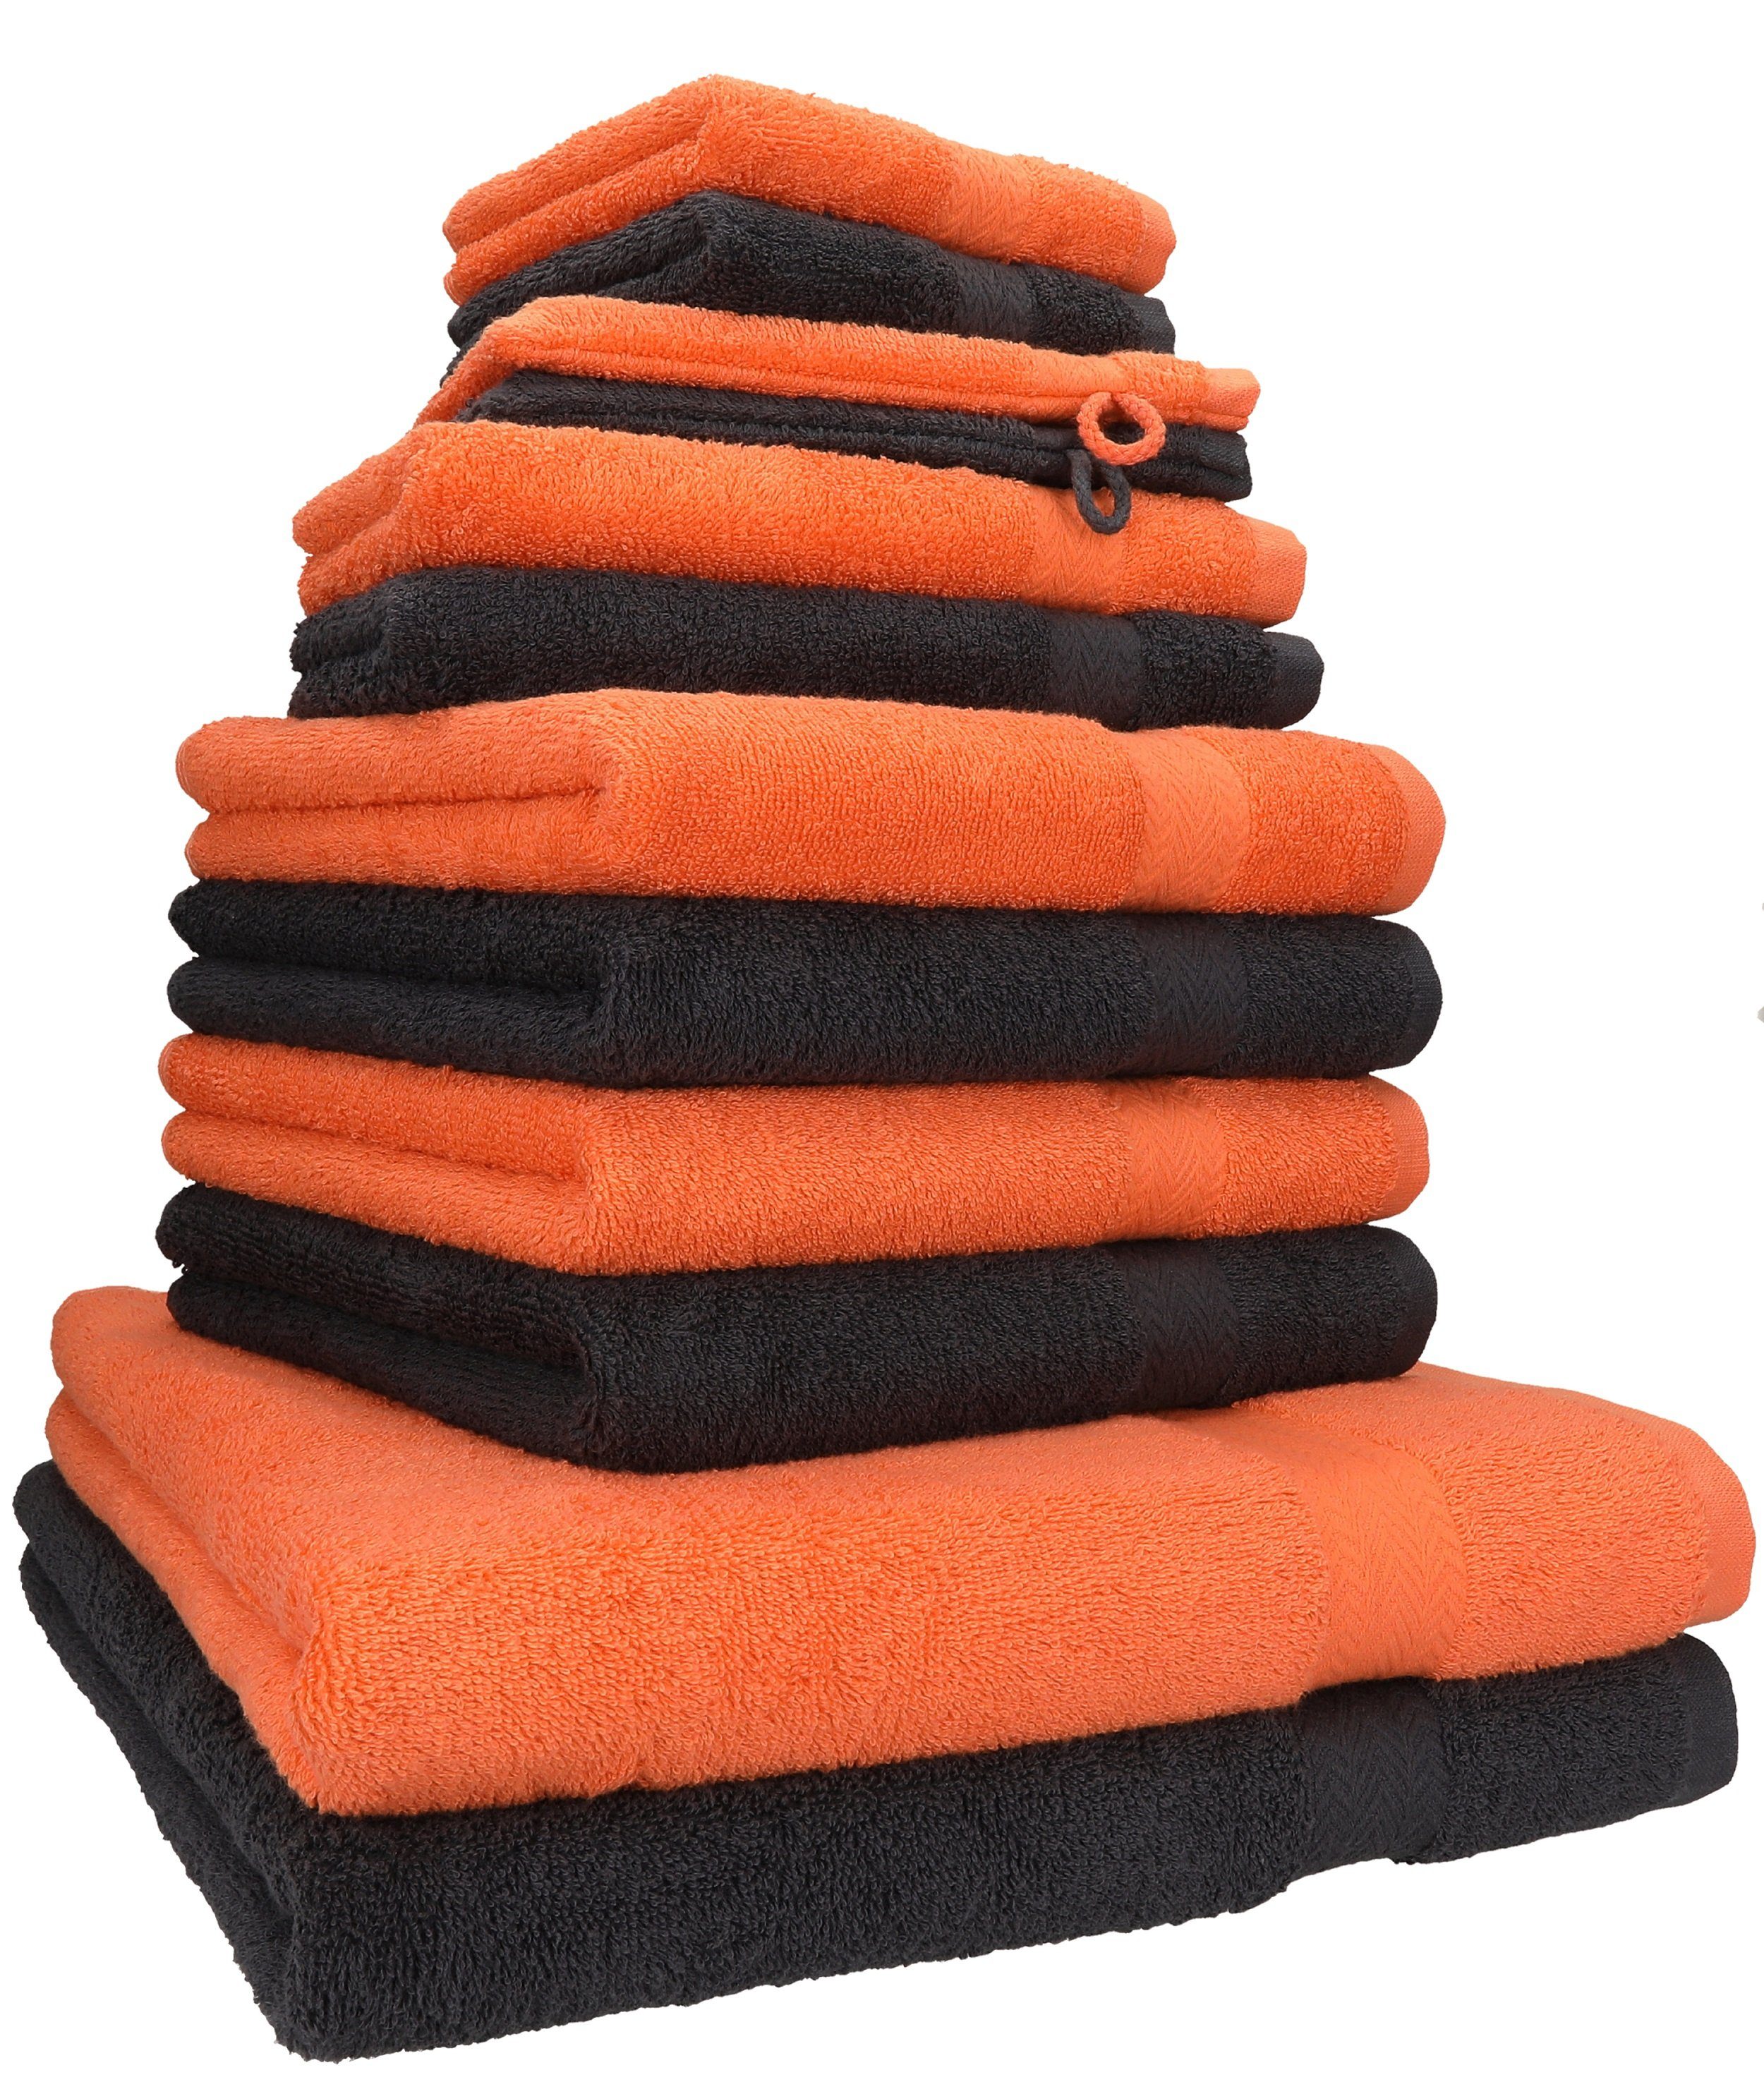 Betz Handtuch Set 12-TLG. Handtuch Set Premium 100% Baumwolle 2 Duschtücher 4 Handtücher 2 Gästetücher 2 Seiftücher 2 Waschhandschuhe Farbe blutorange/Graphit, 100% Baumwolle, (12-tlg)